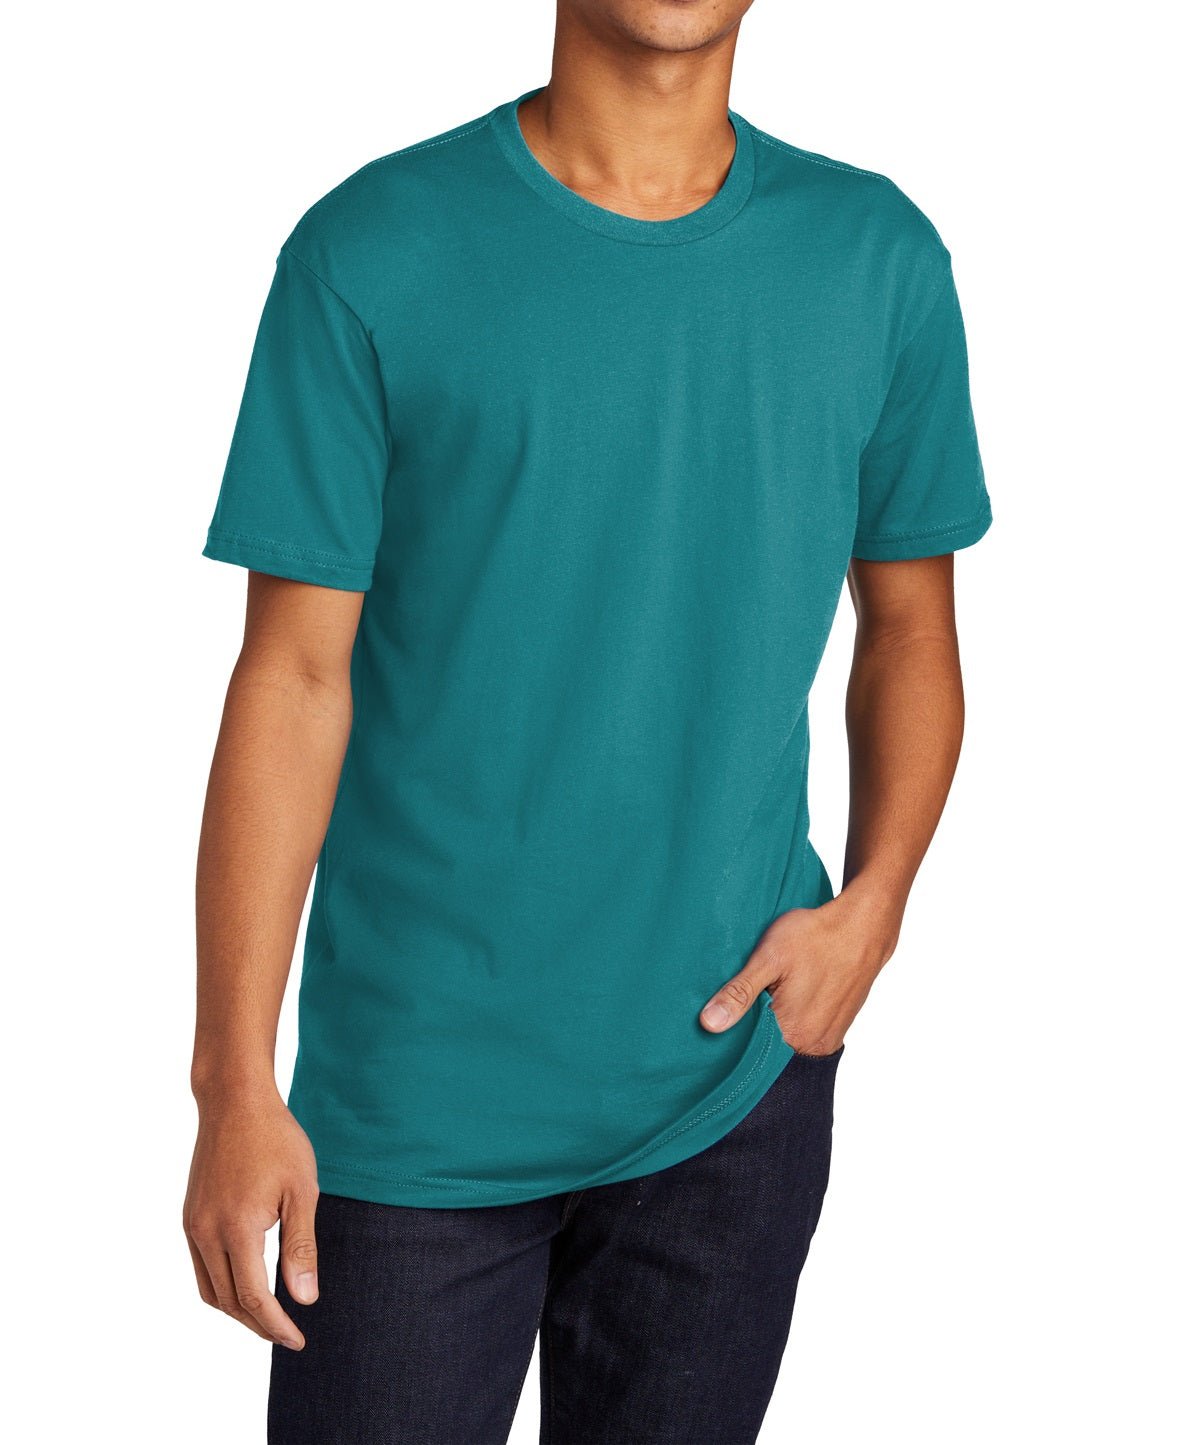 NL3600 Camiseta de algodón unisex de siguiente nivel